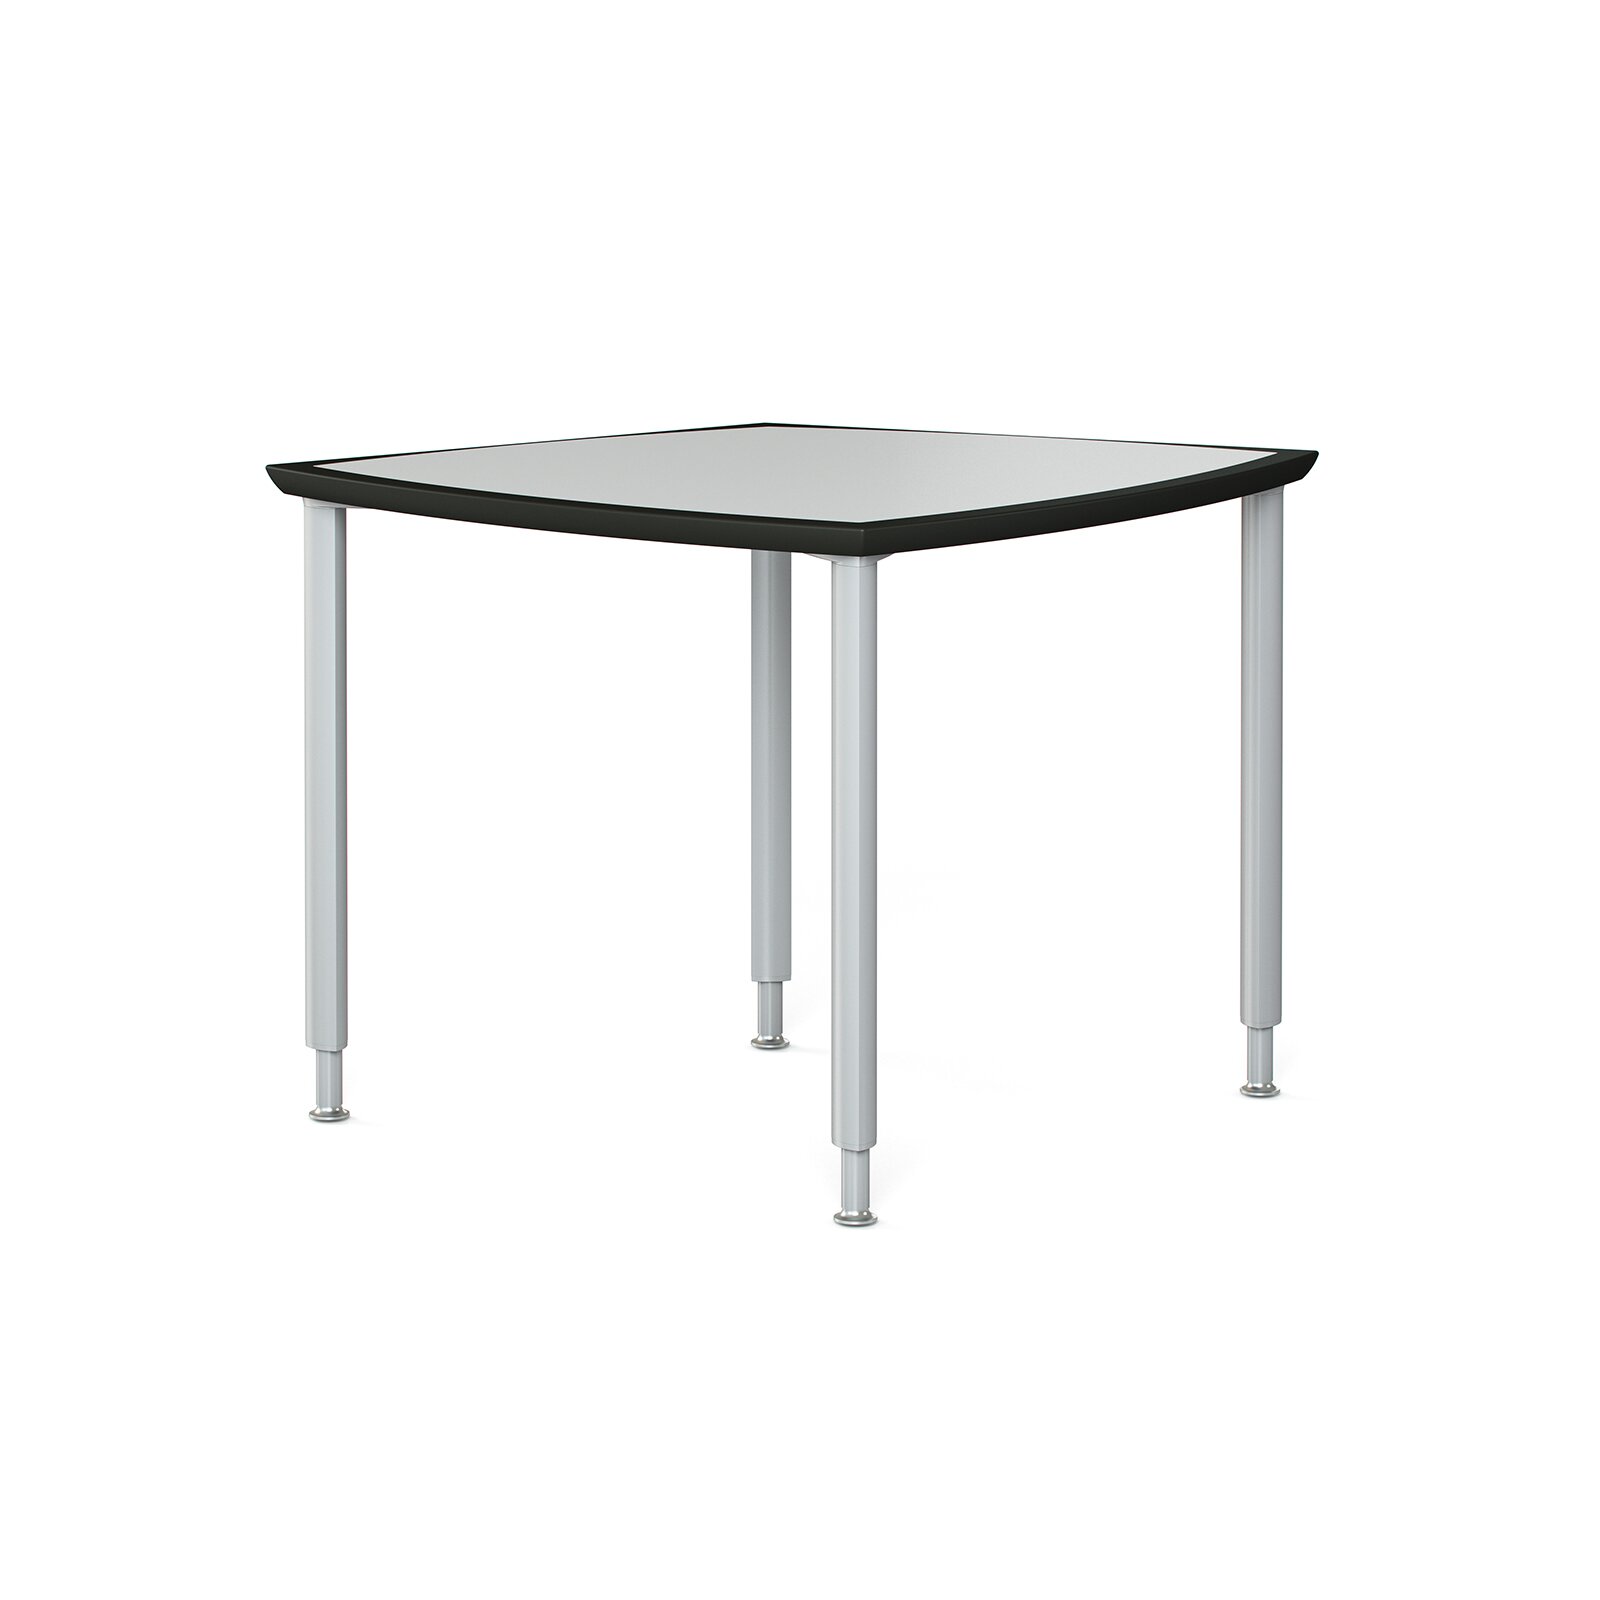 Izzy Design Clara 32" x 40" Diamond Table & Reviews Wayfair